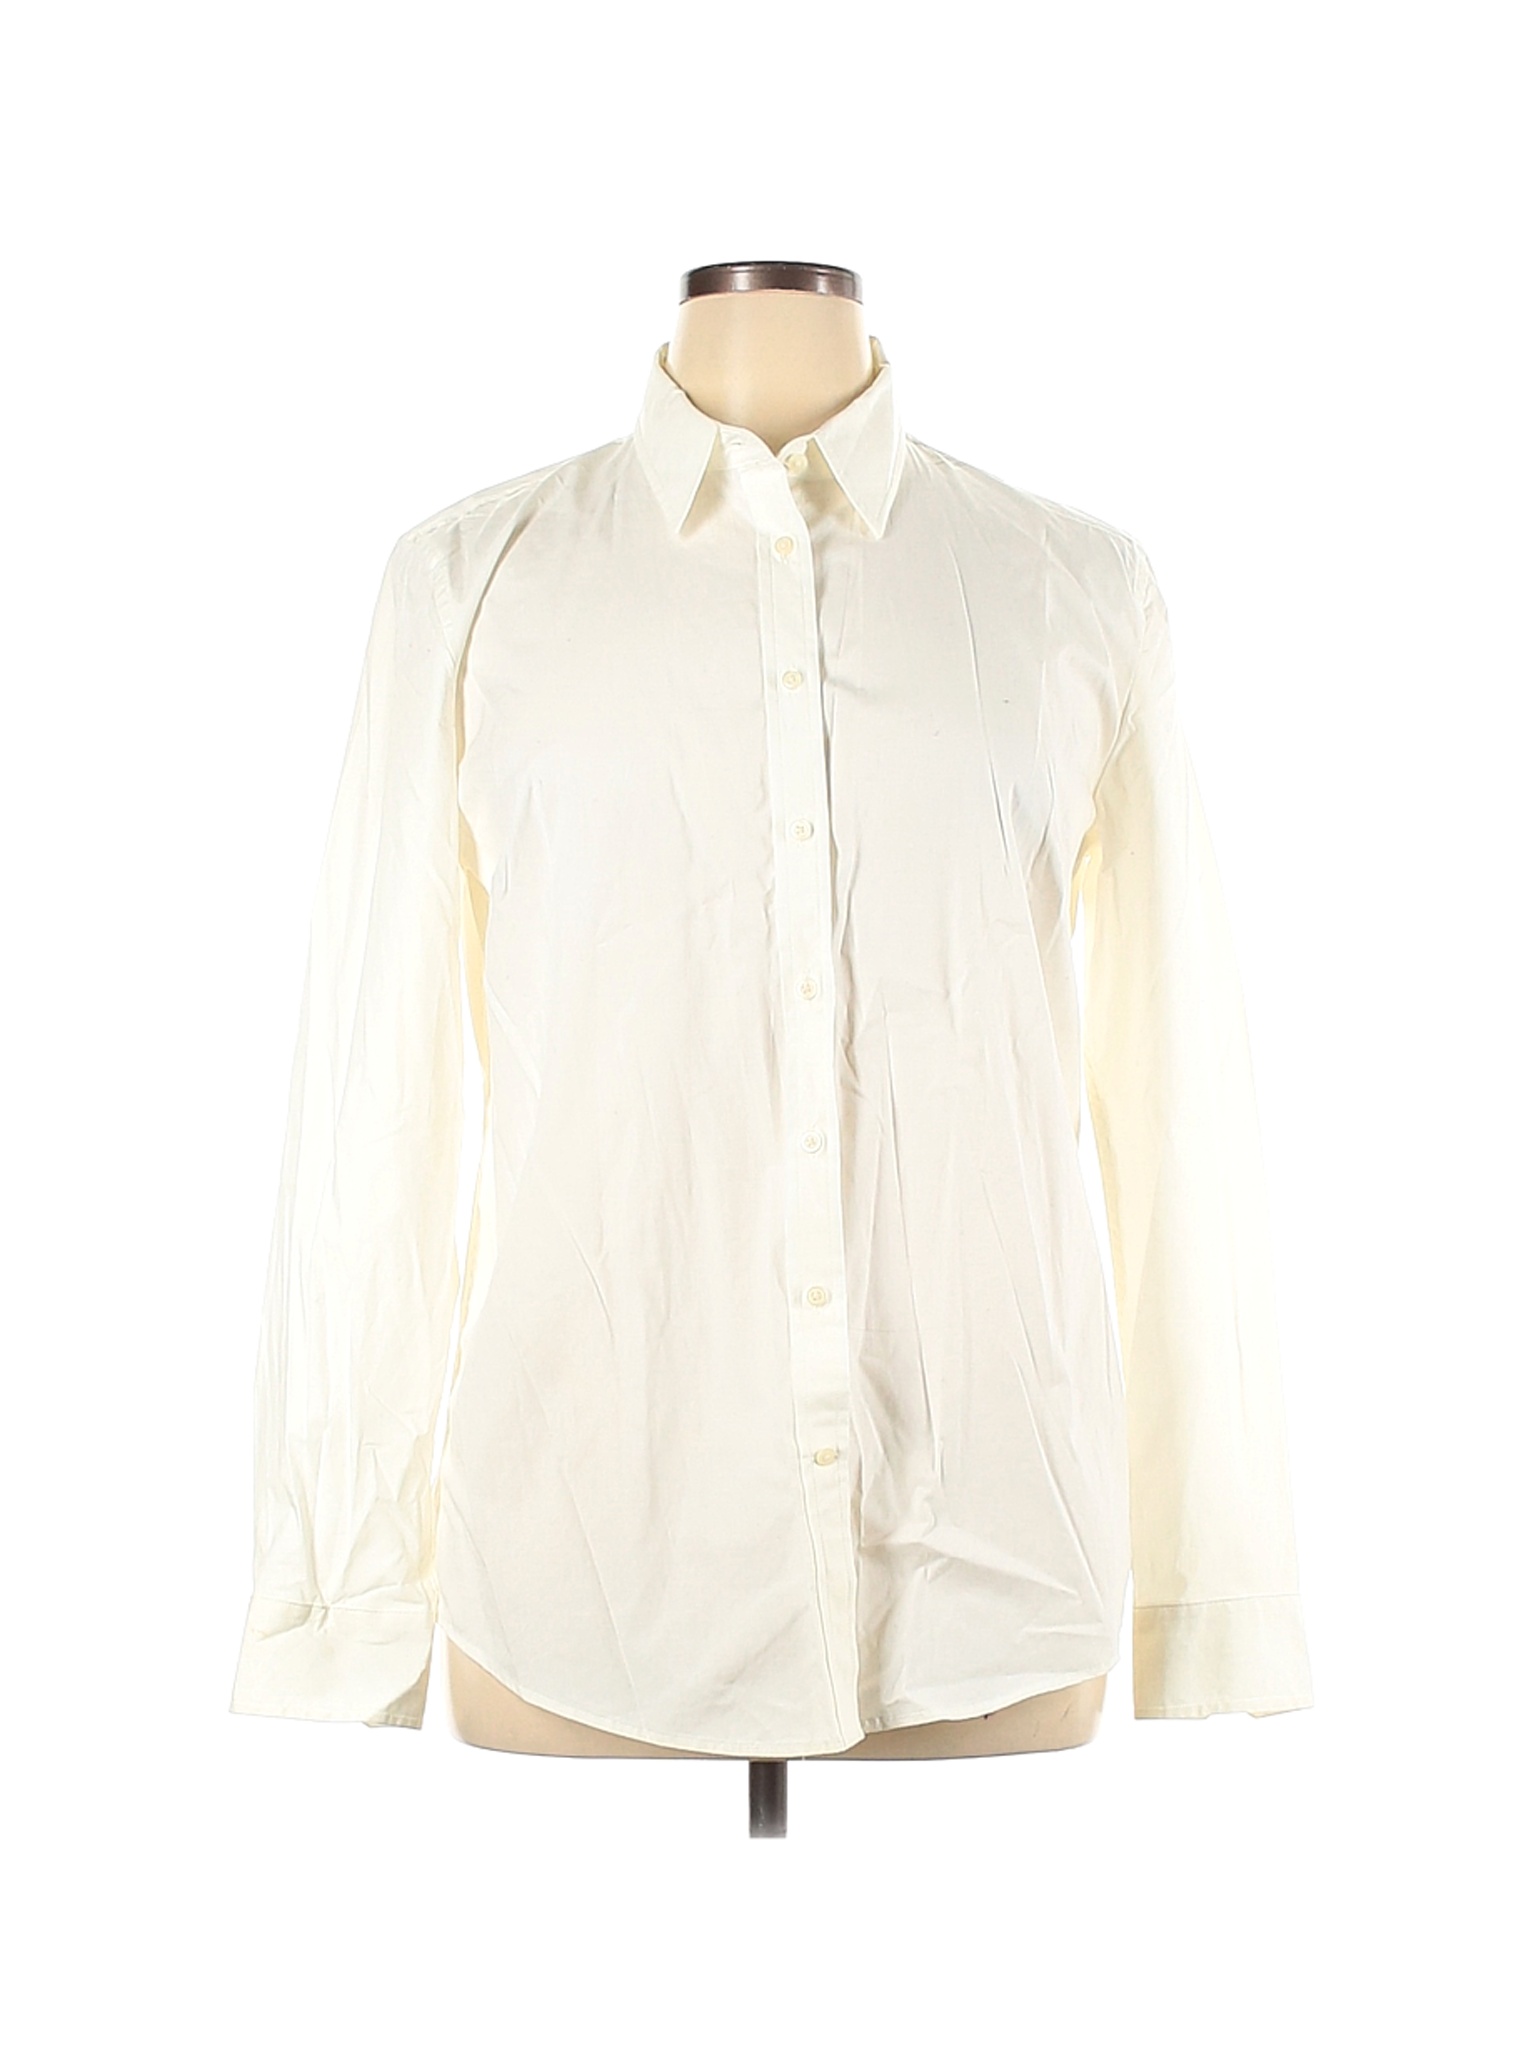 NWT Gap Women Ivory Long Sleeve Button-Down Shirt XL | eBay